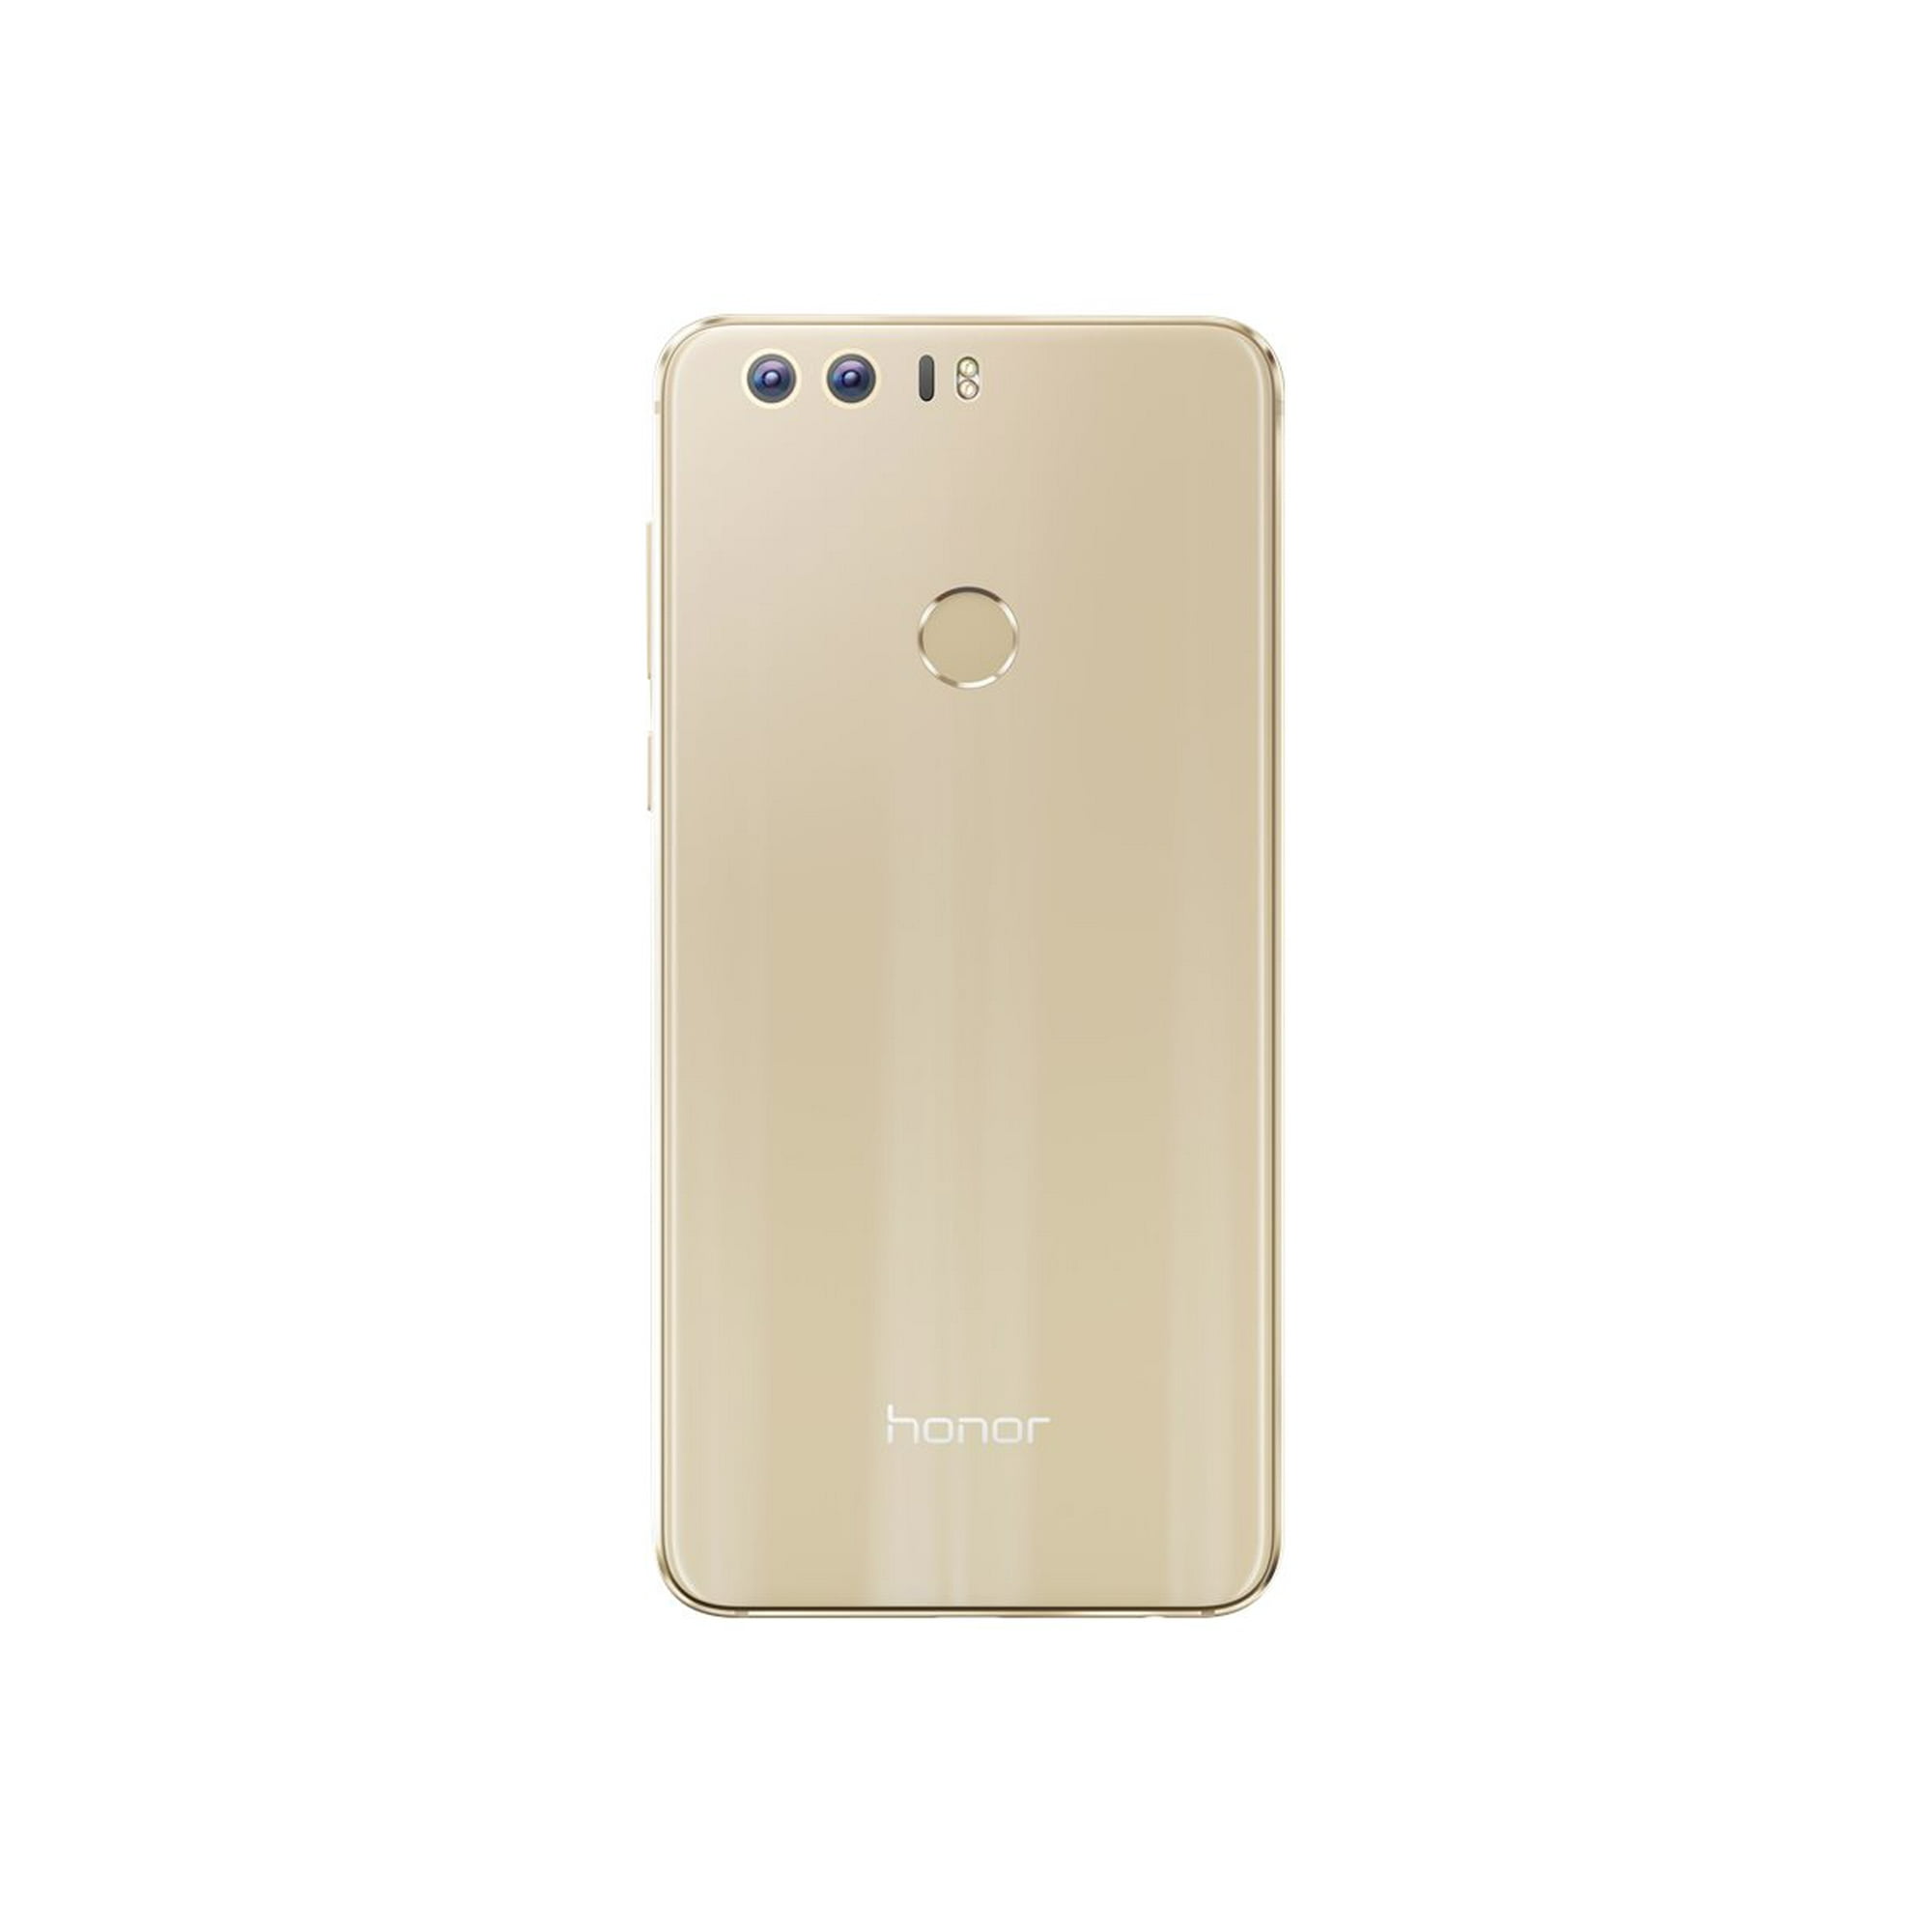 Huawei honor 8 unlocked smartphone 64 gb dual camera